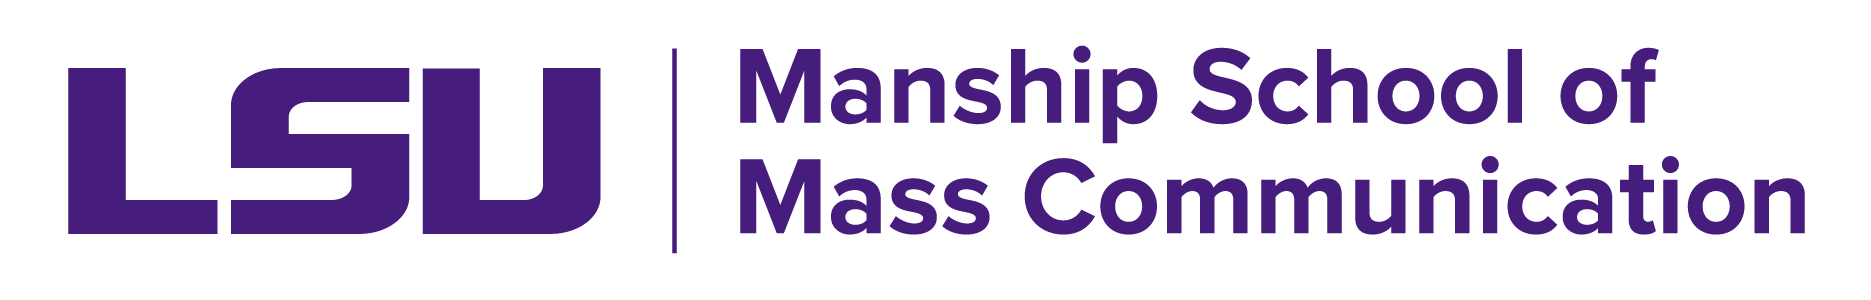 Manship School of Mass Communication logo